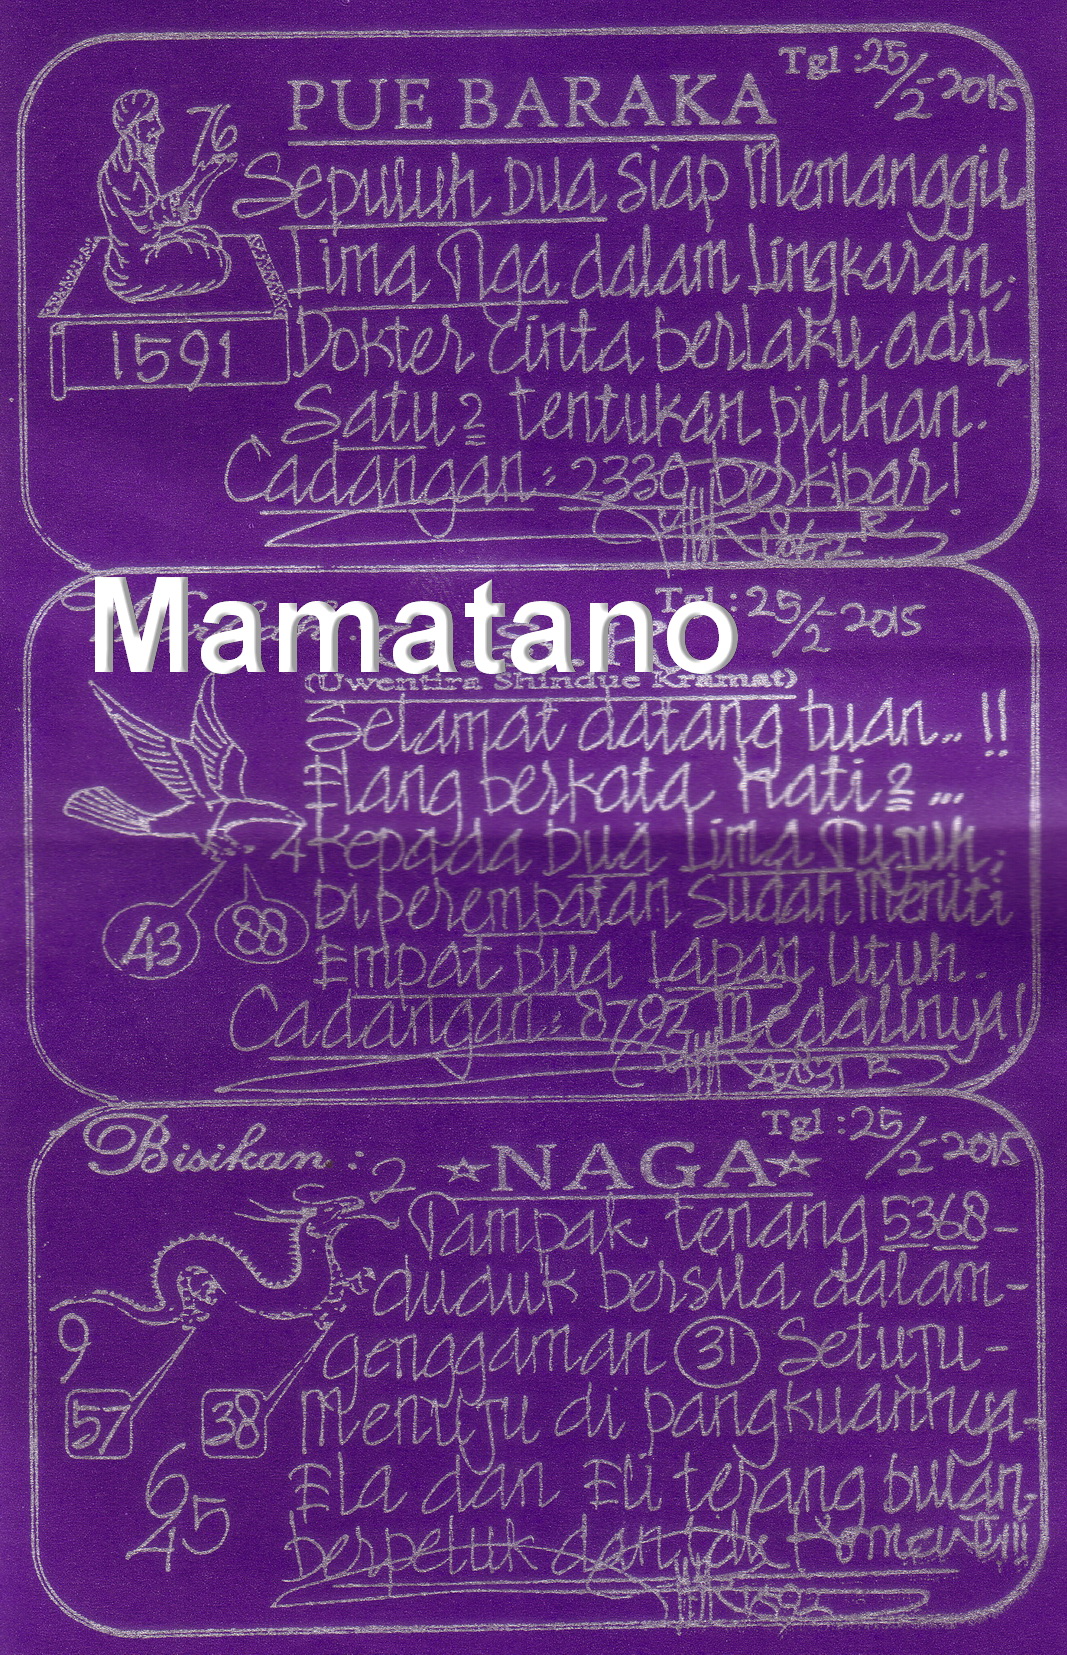 https://mamatano.files.wordpress.com/2015/02/pue-baraka-25-02-2015.jpg